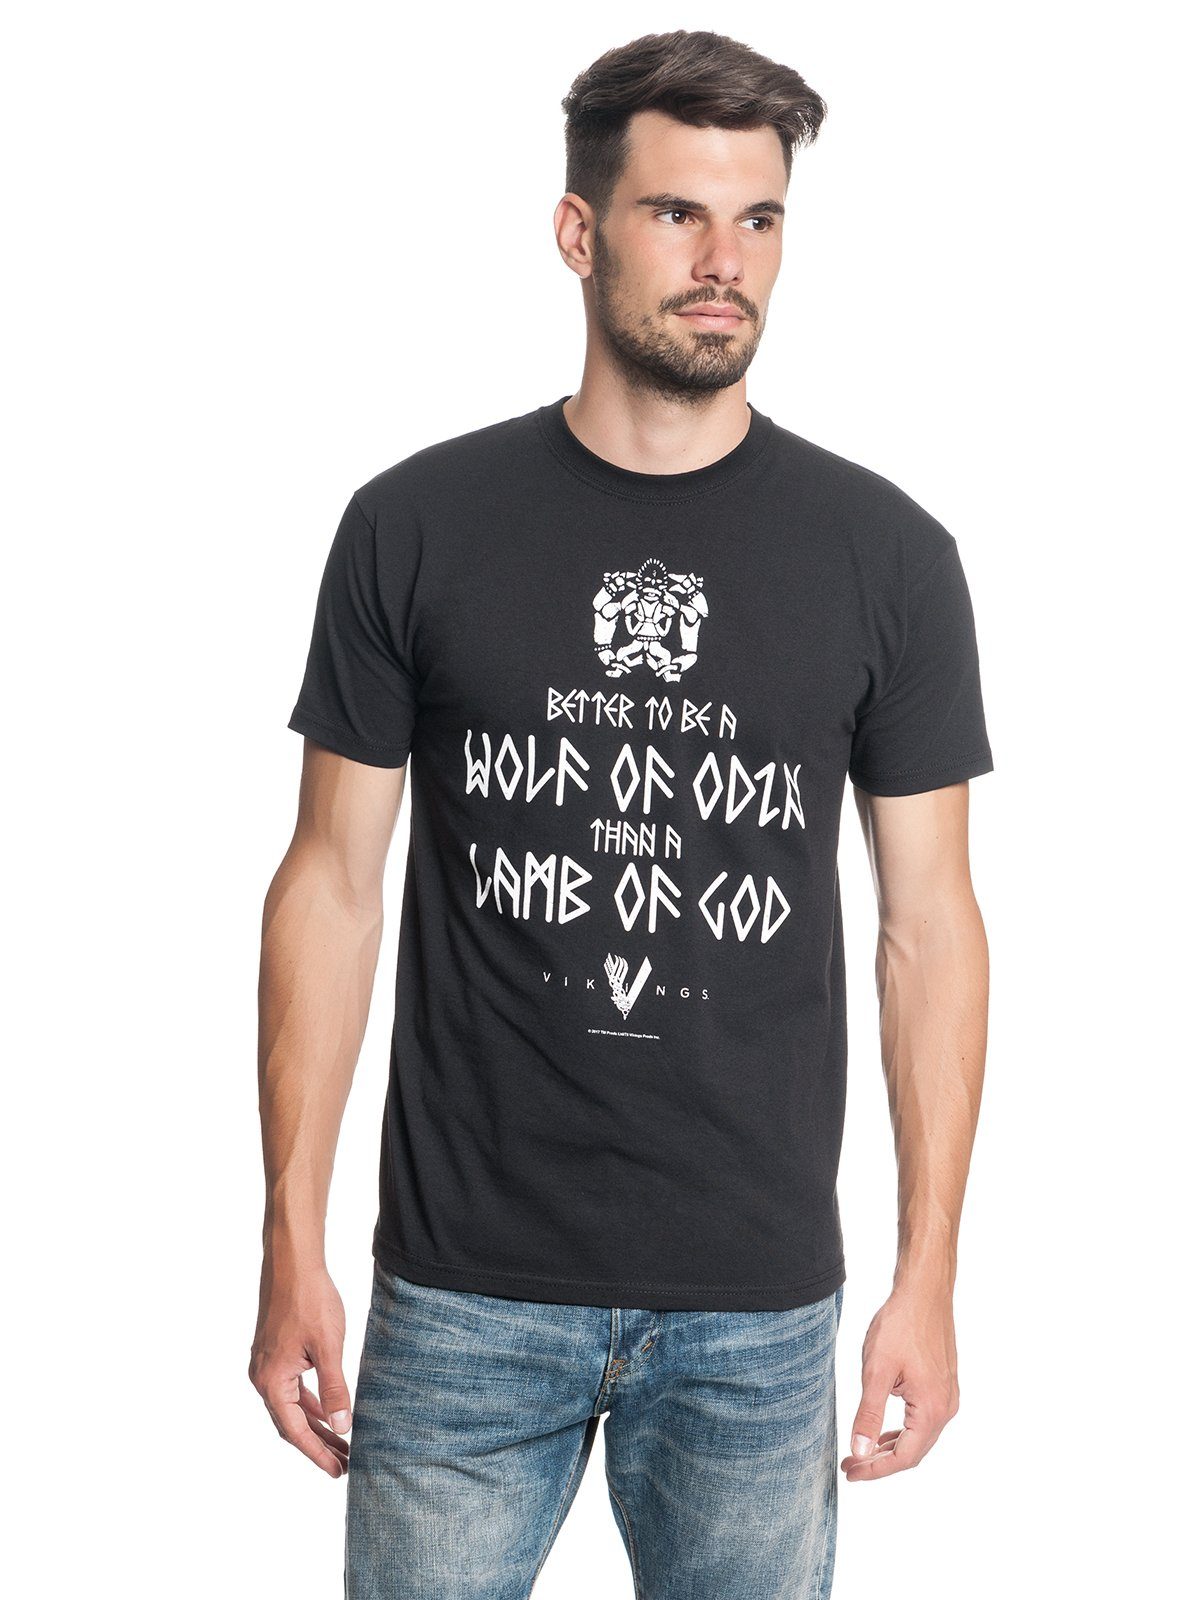 Nastrovje Potsdam T-Shirt Vikings Of Odin Wolf